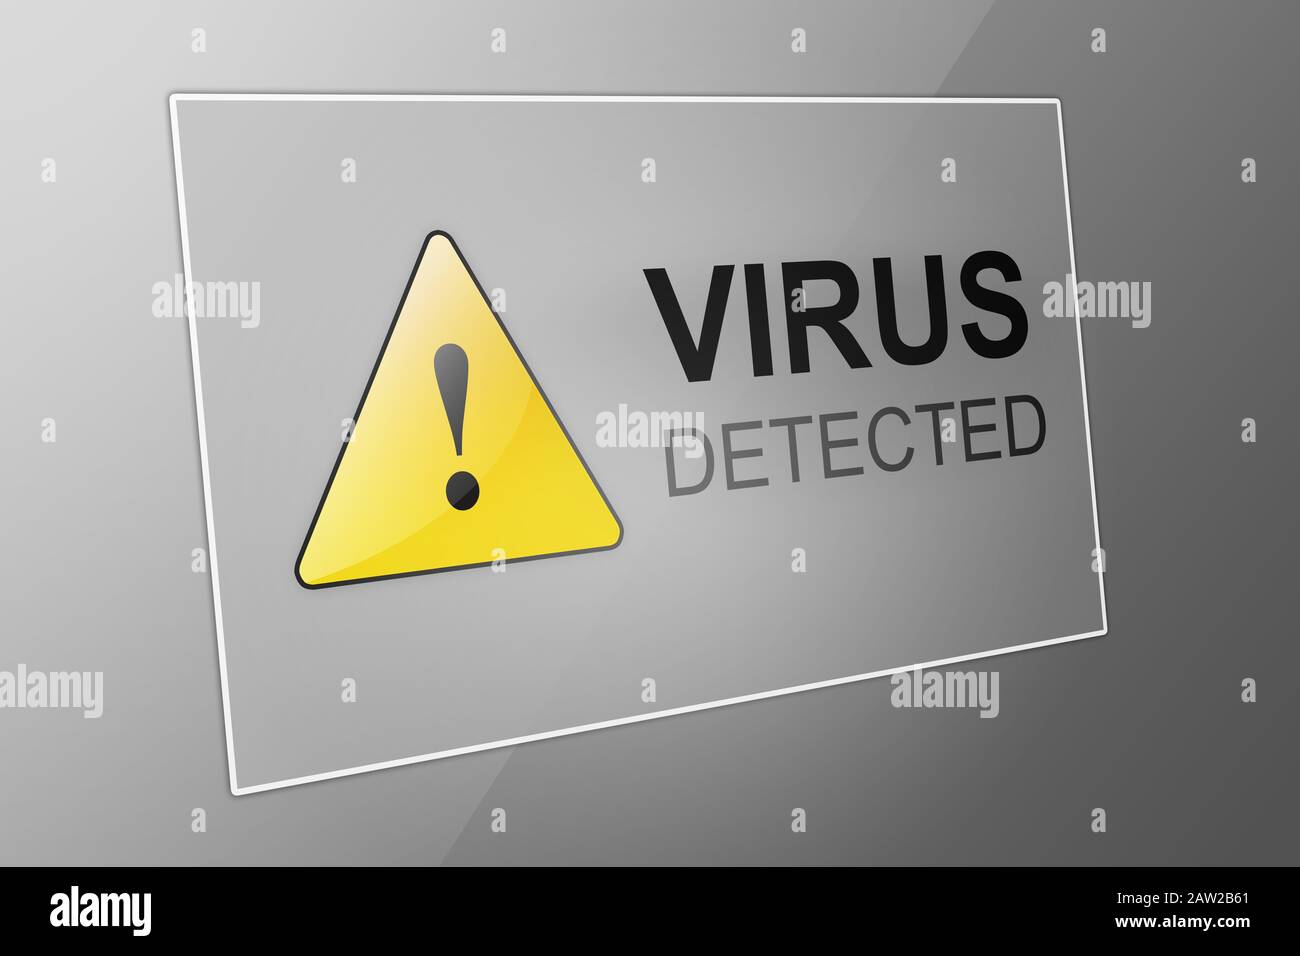 Virus detected - computer virus detection - spyware concept Stock Photo